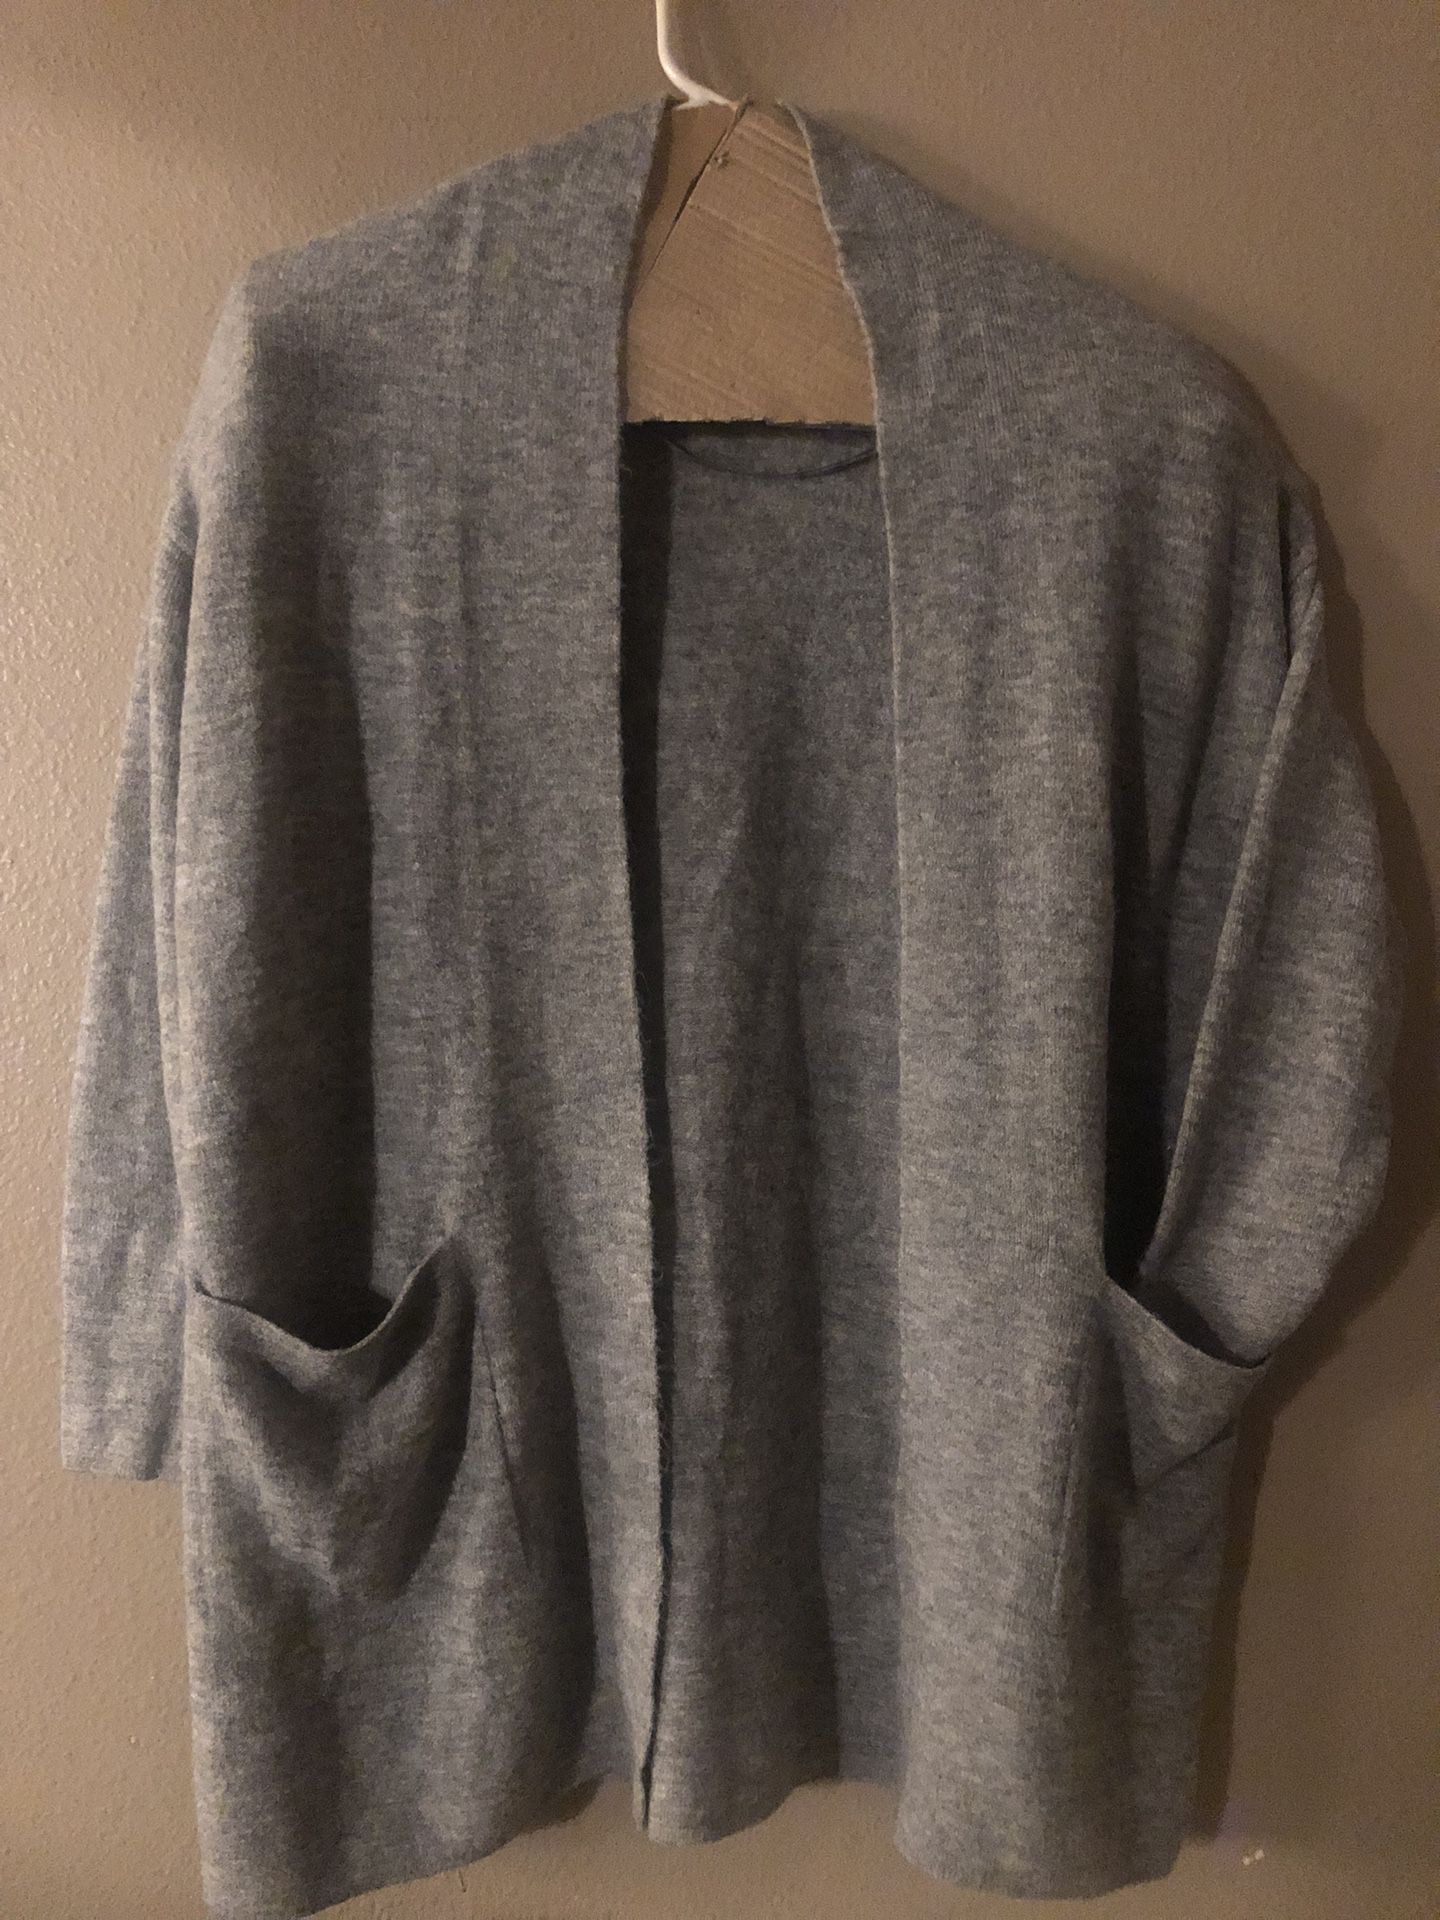 Banana Republic Gray Cardigan Sweater Pockets Women’s Size Large